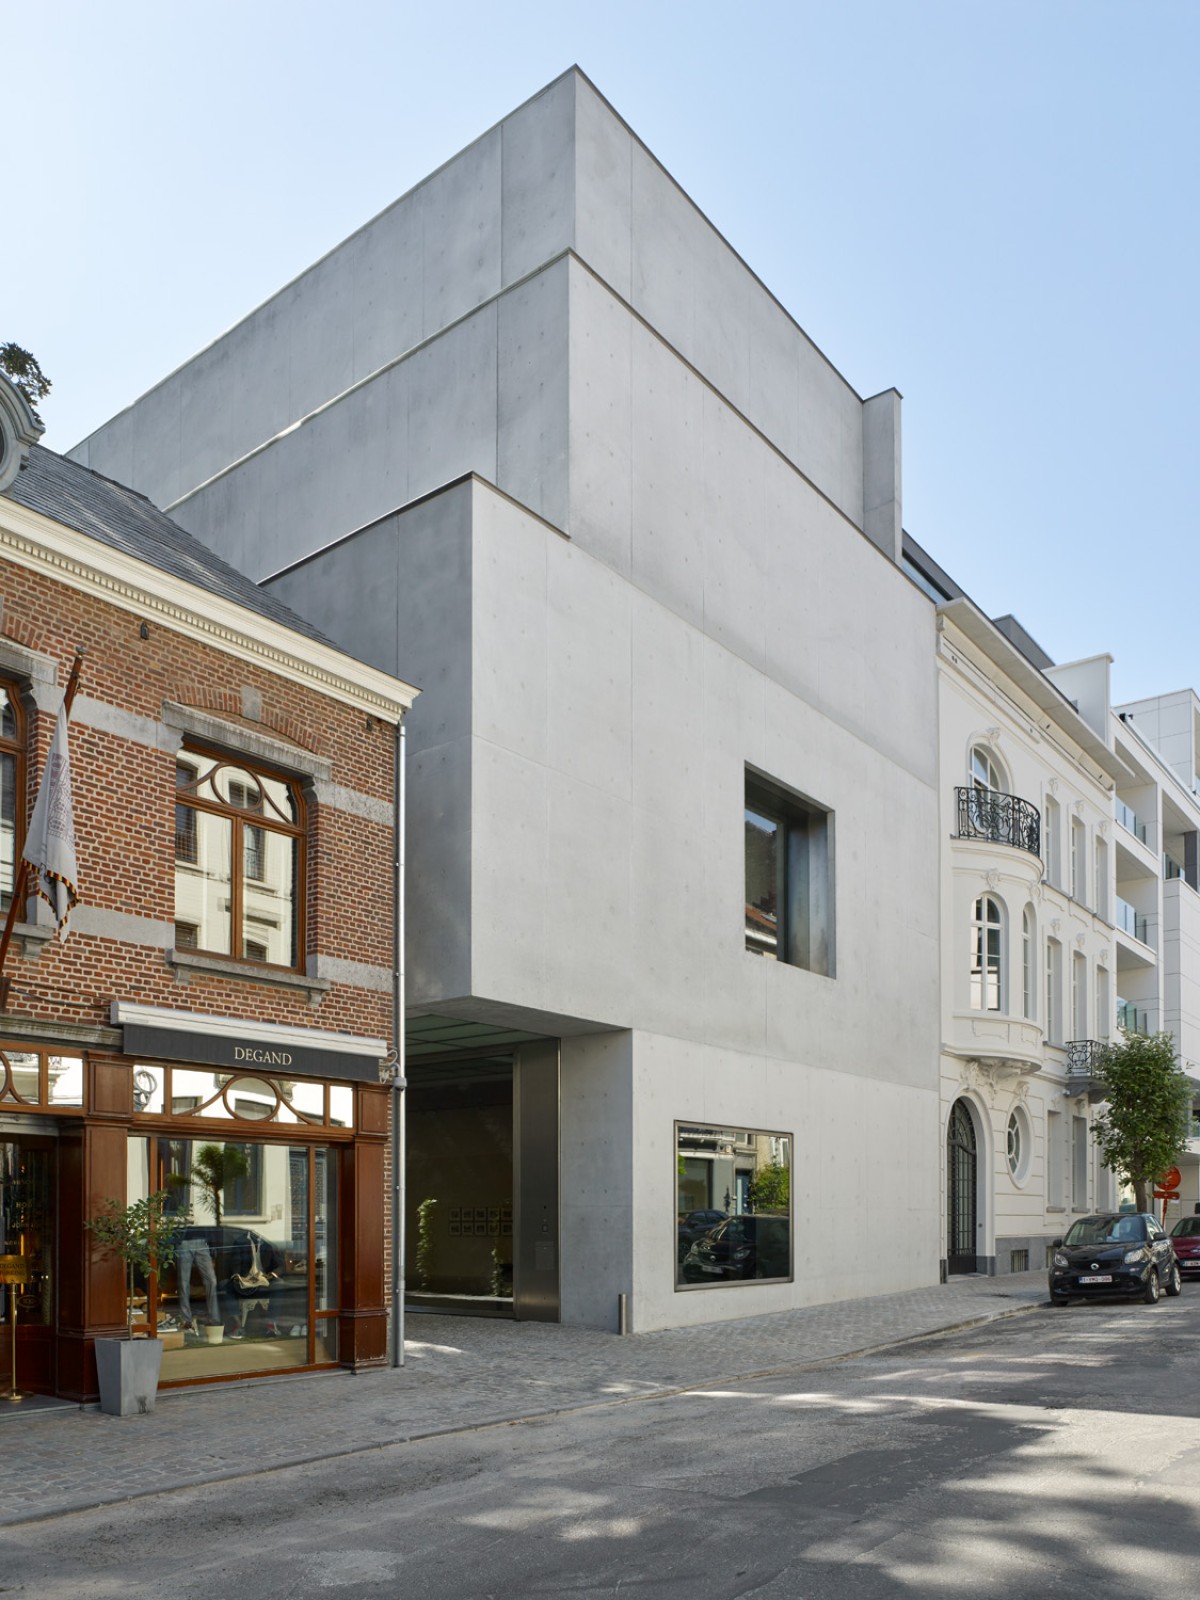 Street view of the St-Georges Gallery of Xavier Hufkens by Robbrecht en Daem architecten - 